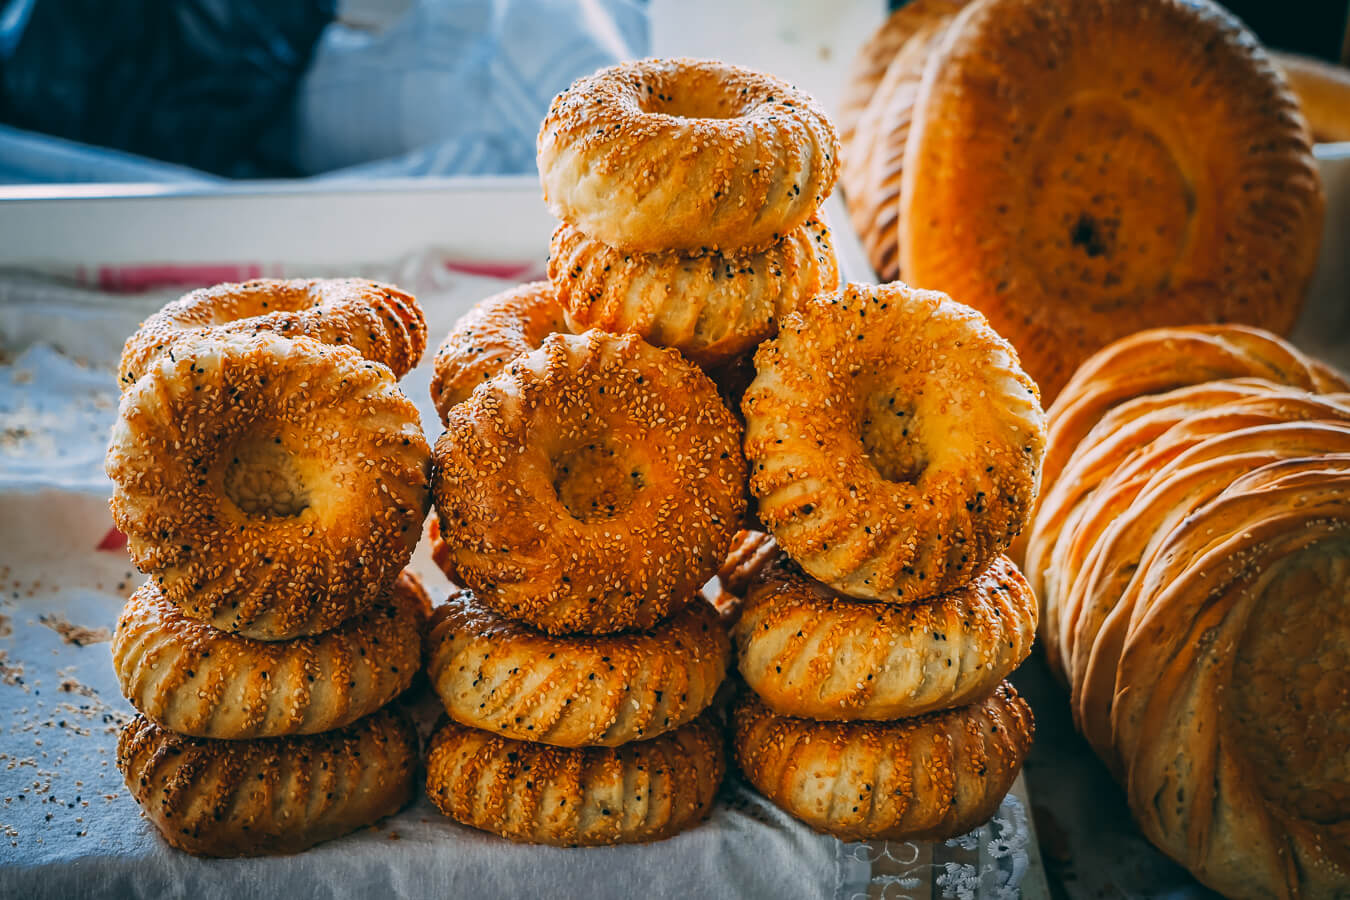 Uzbek round bread is called also lepeshka